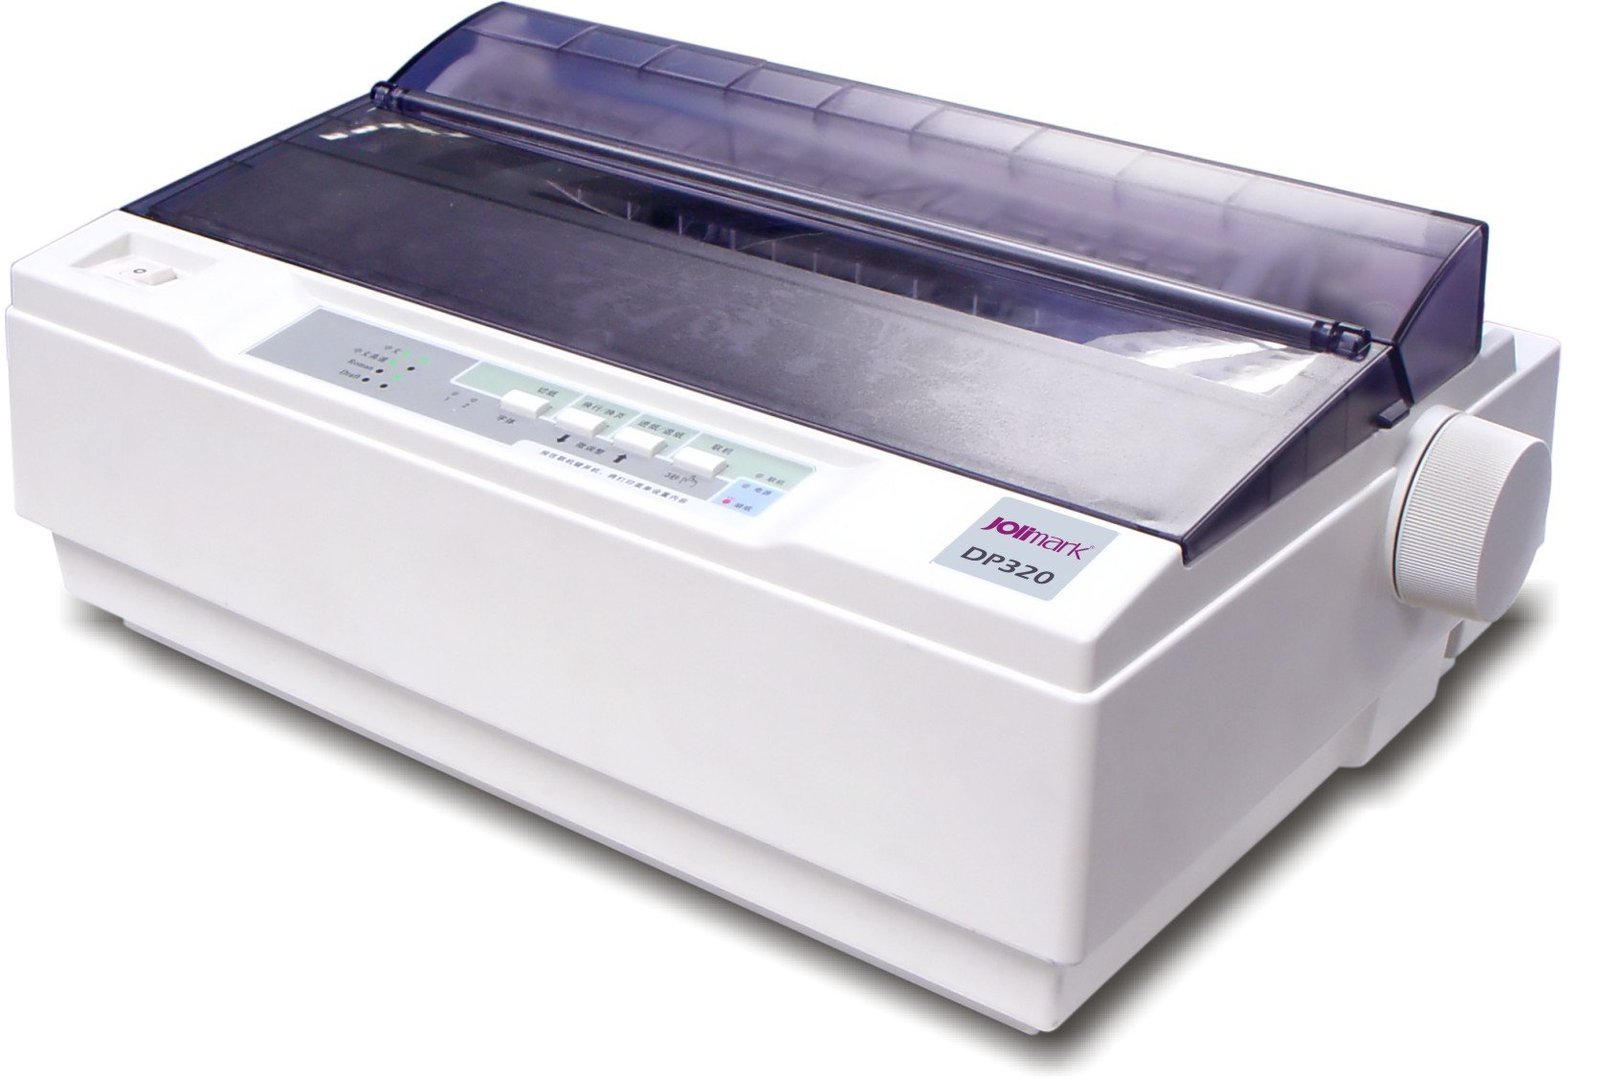 DP320 dot matrix printer